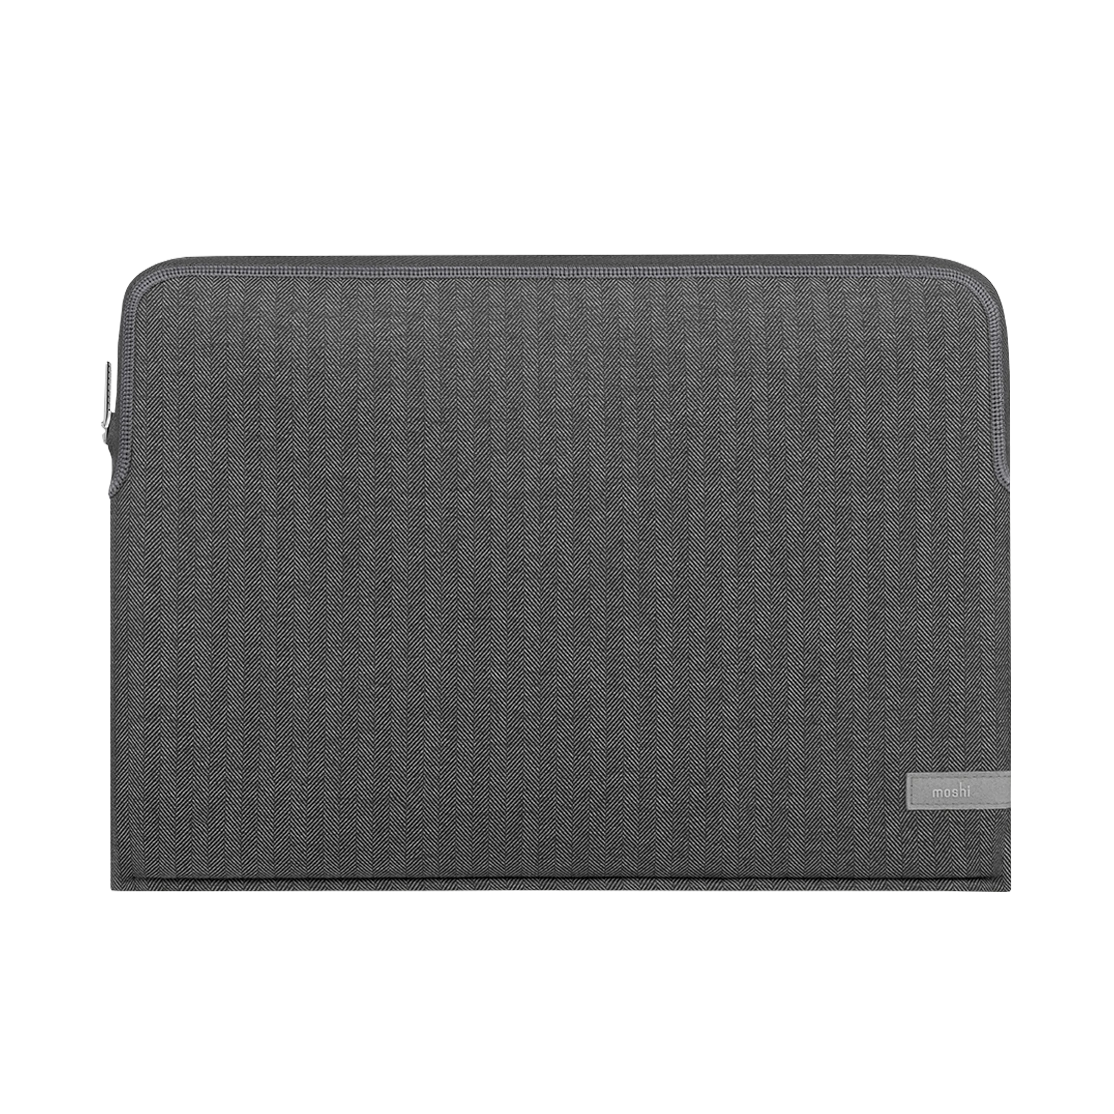 moshi-pluma-bag-macbook-pro-16-inch